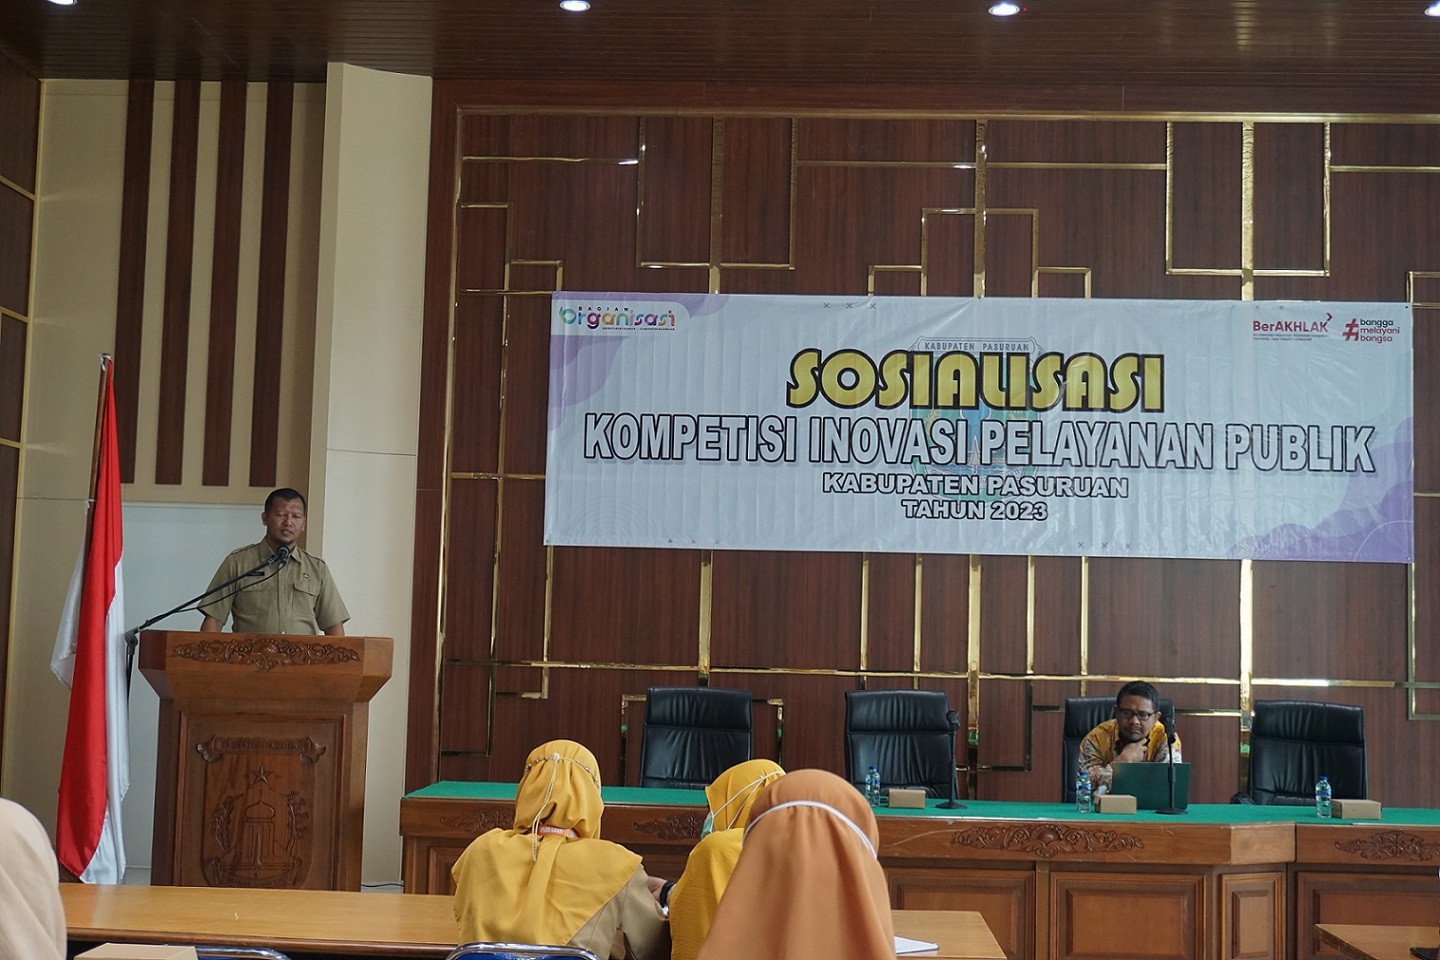 Sosialisasi Kompetisi Inovasi Pelayanan Publik Kabupaten Pasuruan